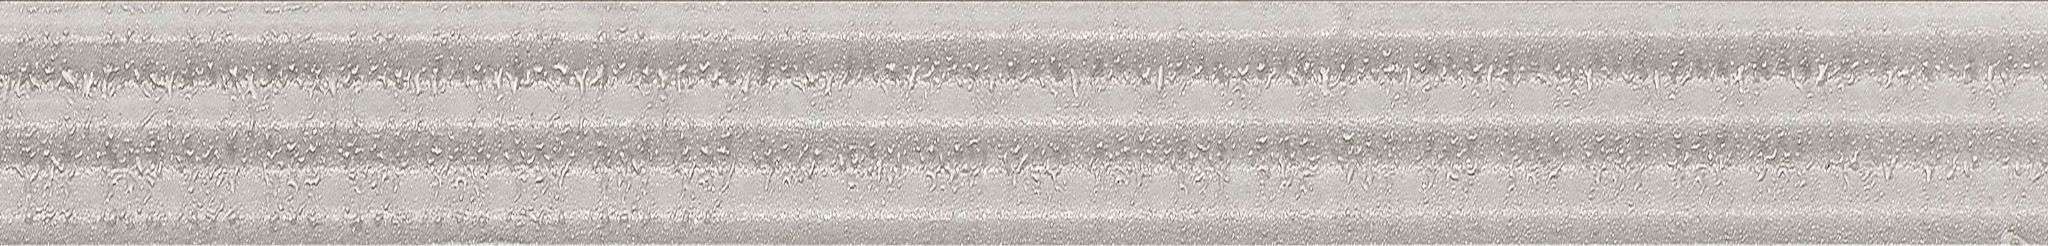 Бордюры Atlantic Tiles Godet Moldura Evase, цвет серый, поверхность глянцевая, квадрат, 25x250